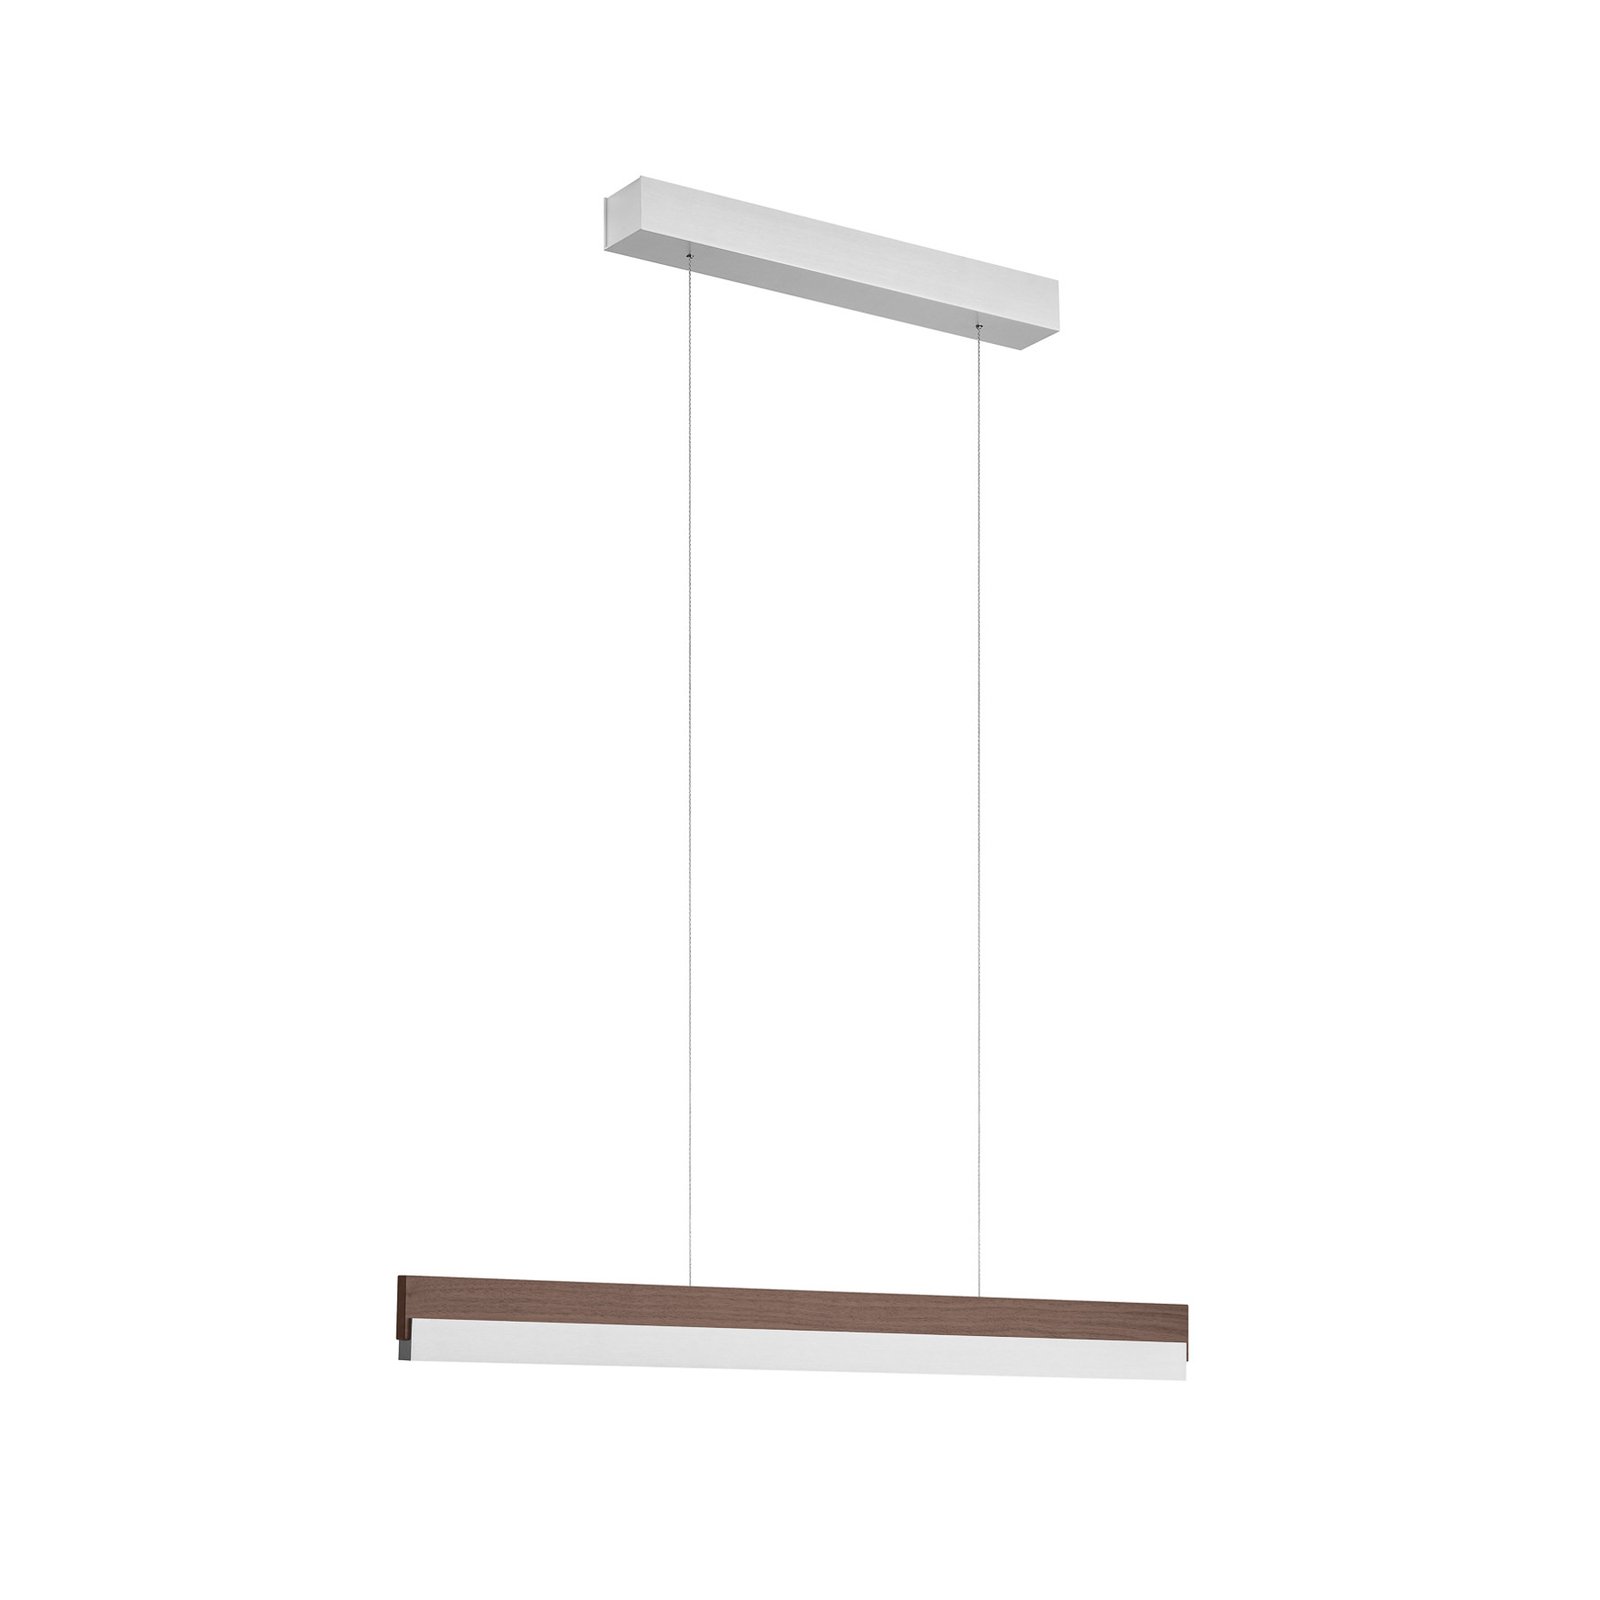 Quitani hanglamp Keijo, nikkel/noot, 83 cm